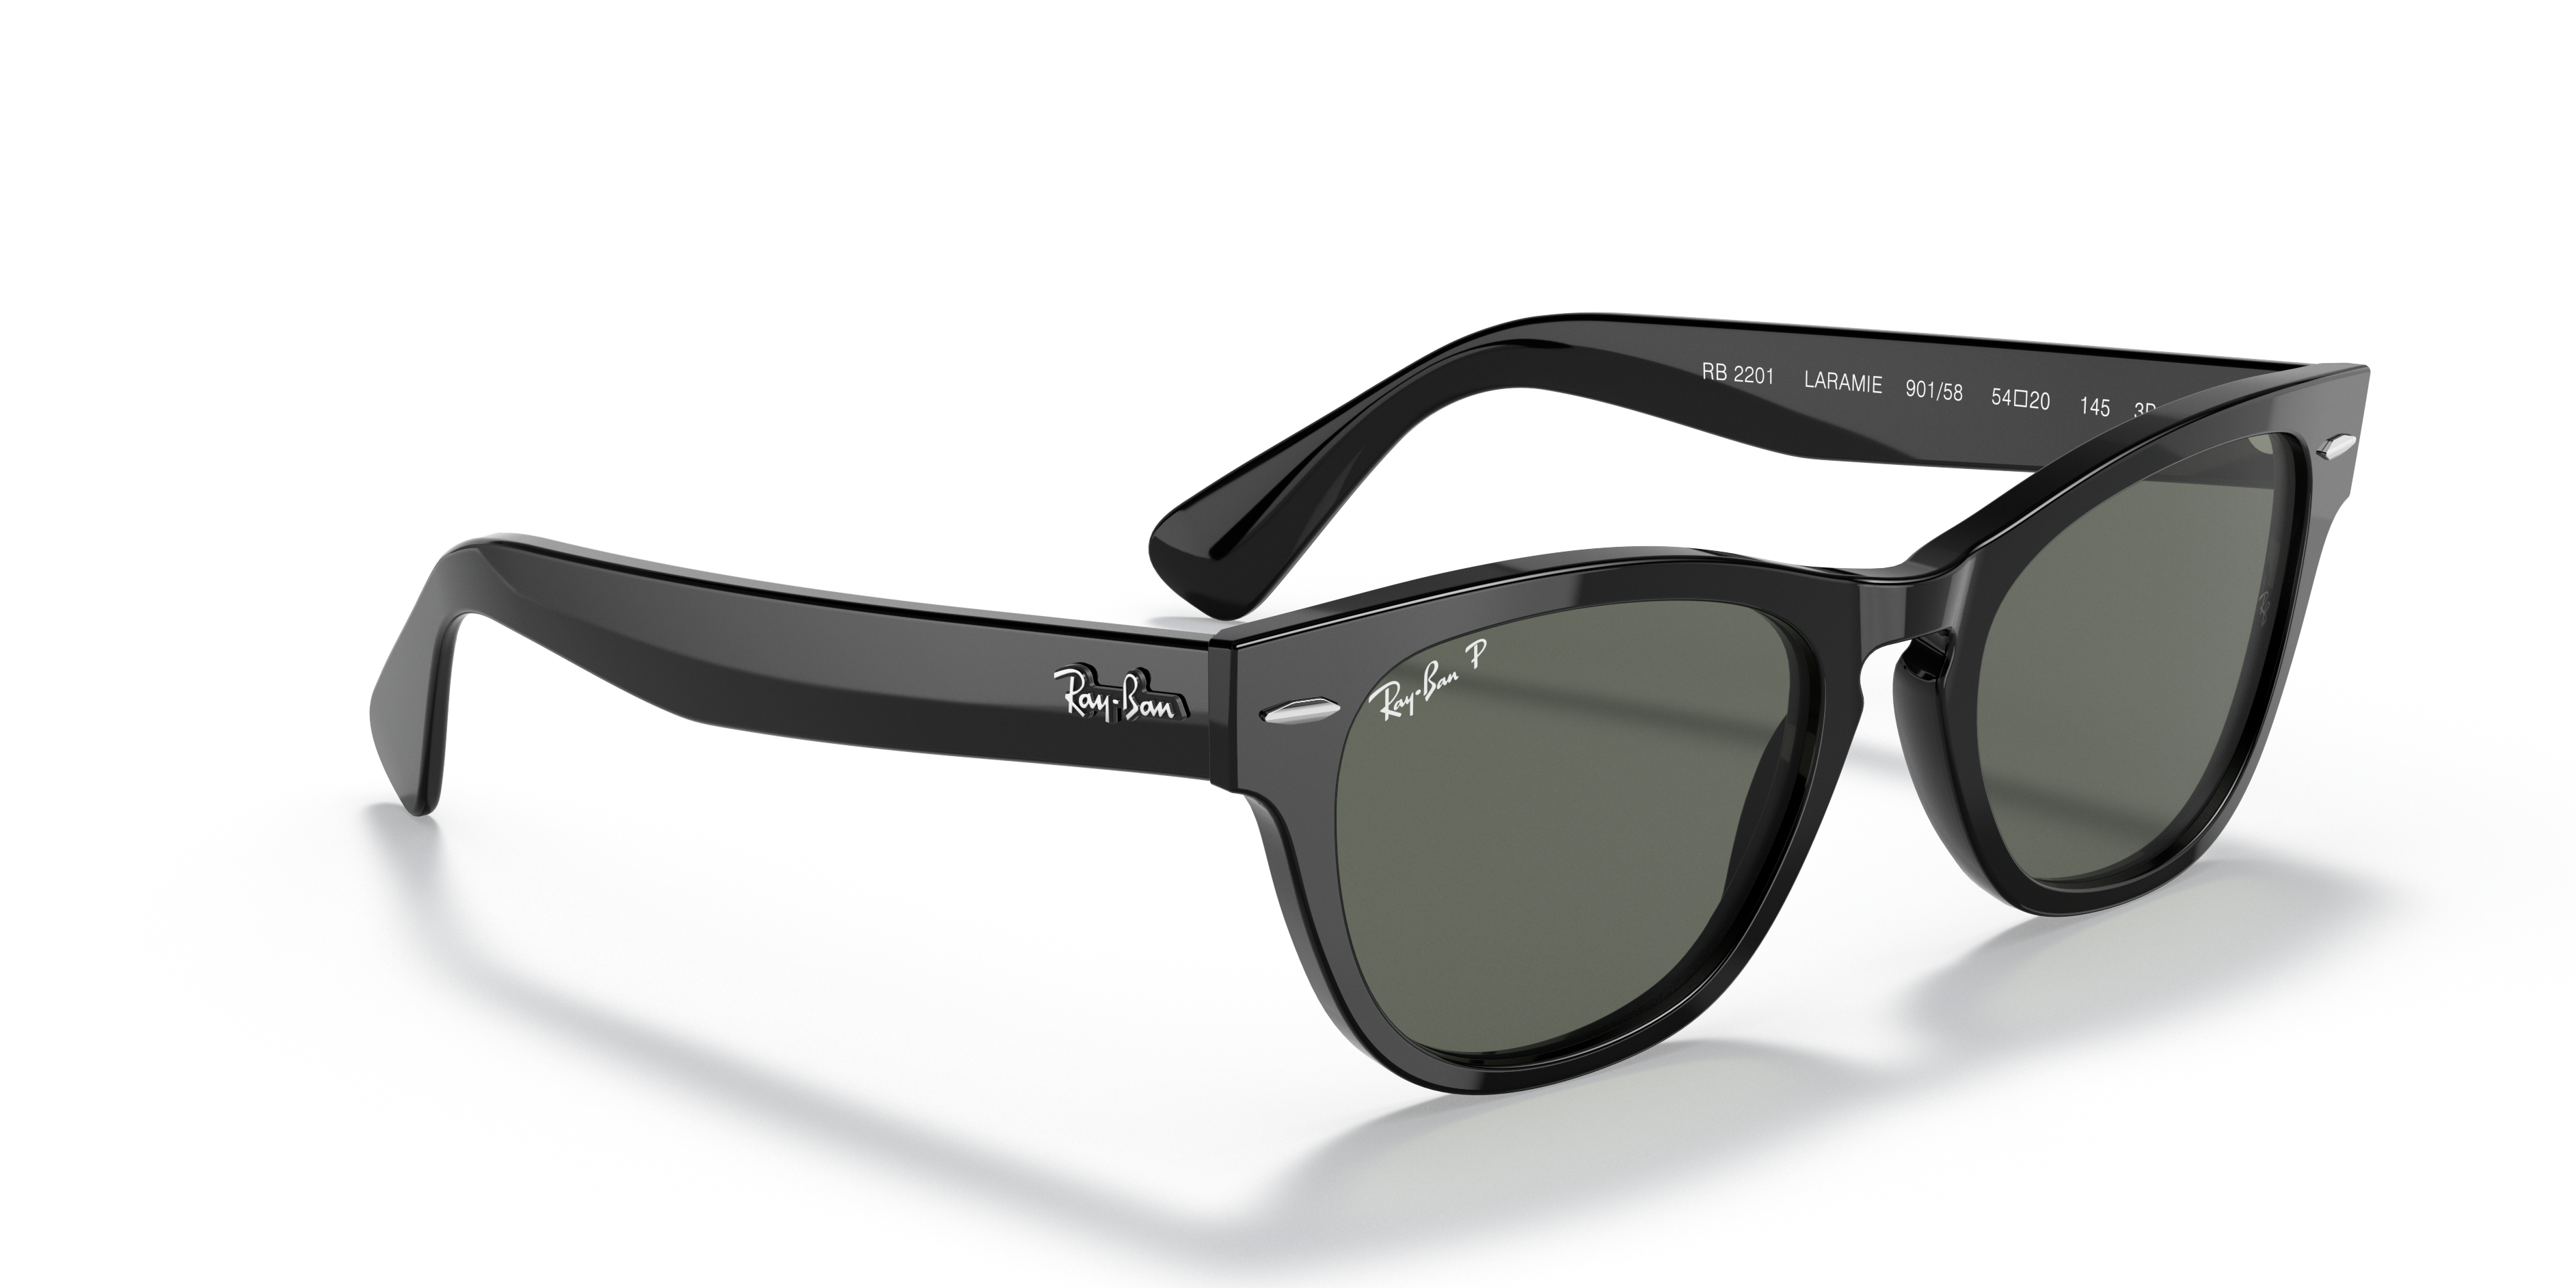 Laramie Sunglasses in Black and Green | Ray-Ban®